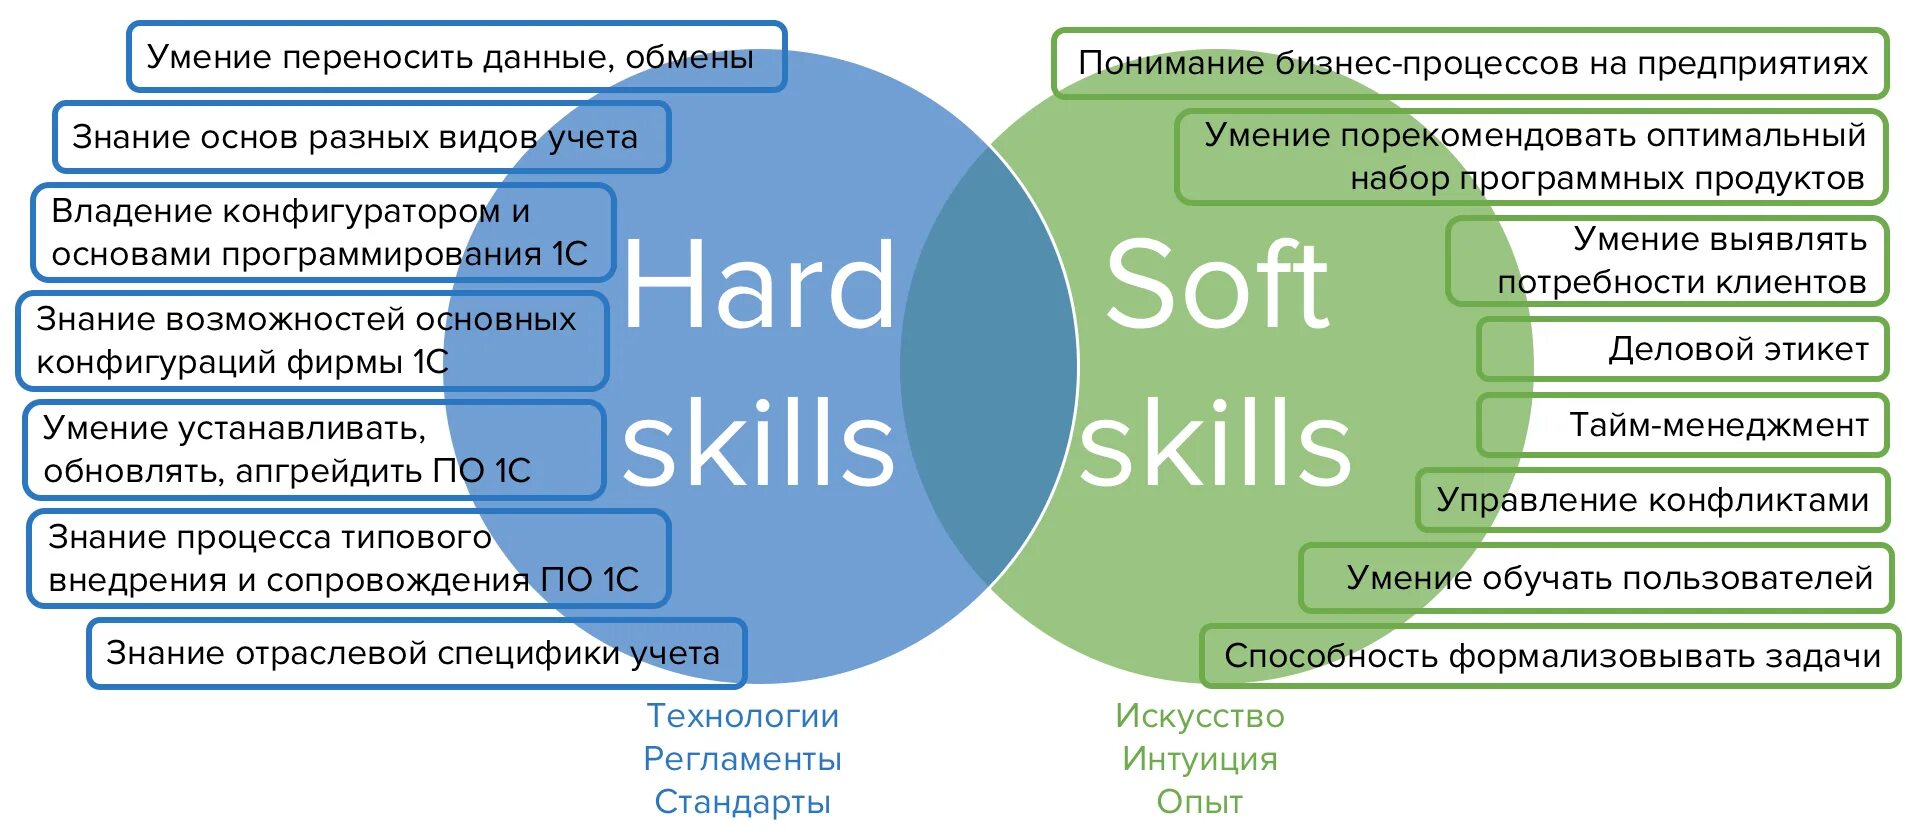 Что значит close. Hard skills и Soft skills. Навыки Хард и софт Скиллс. Компетенции педагога hard skills Soft skills. Софт и Хард компетенции.